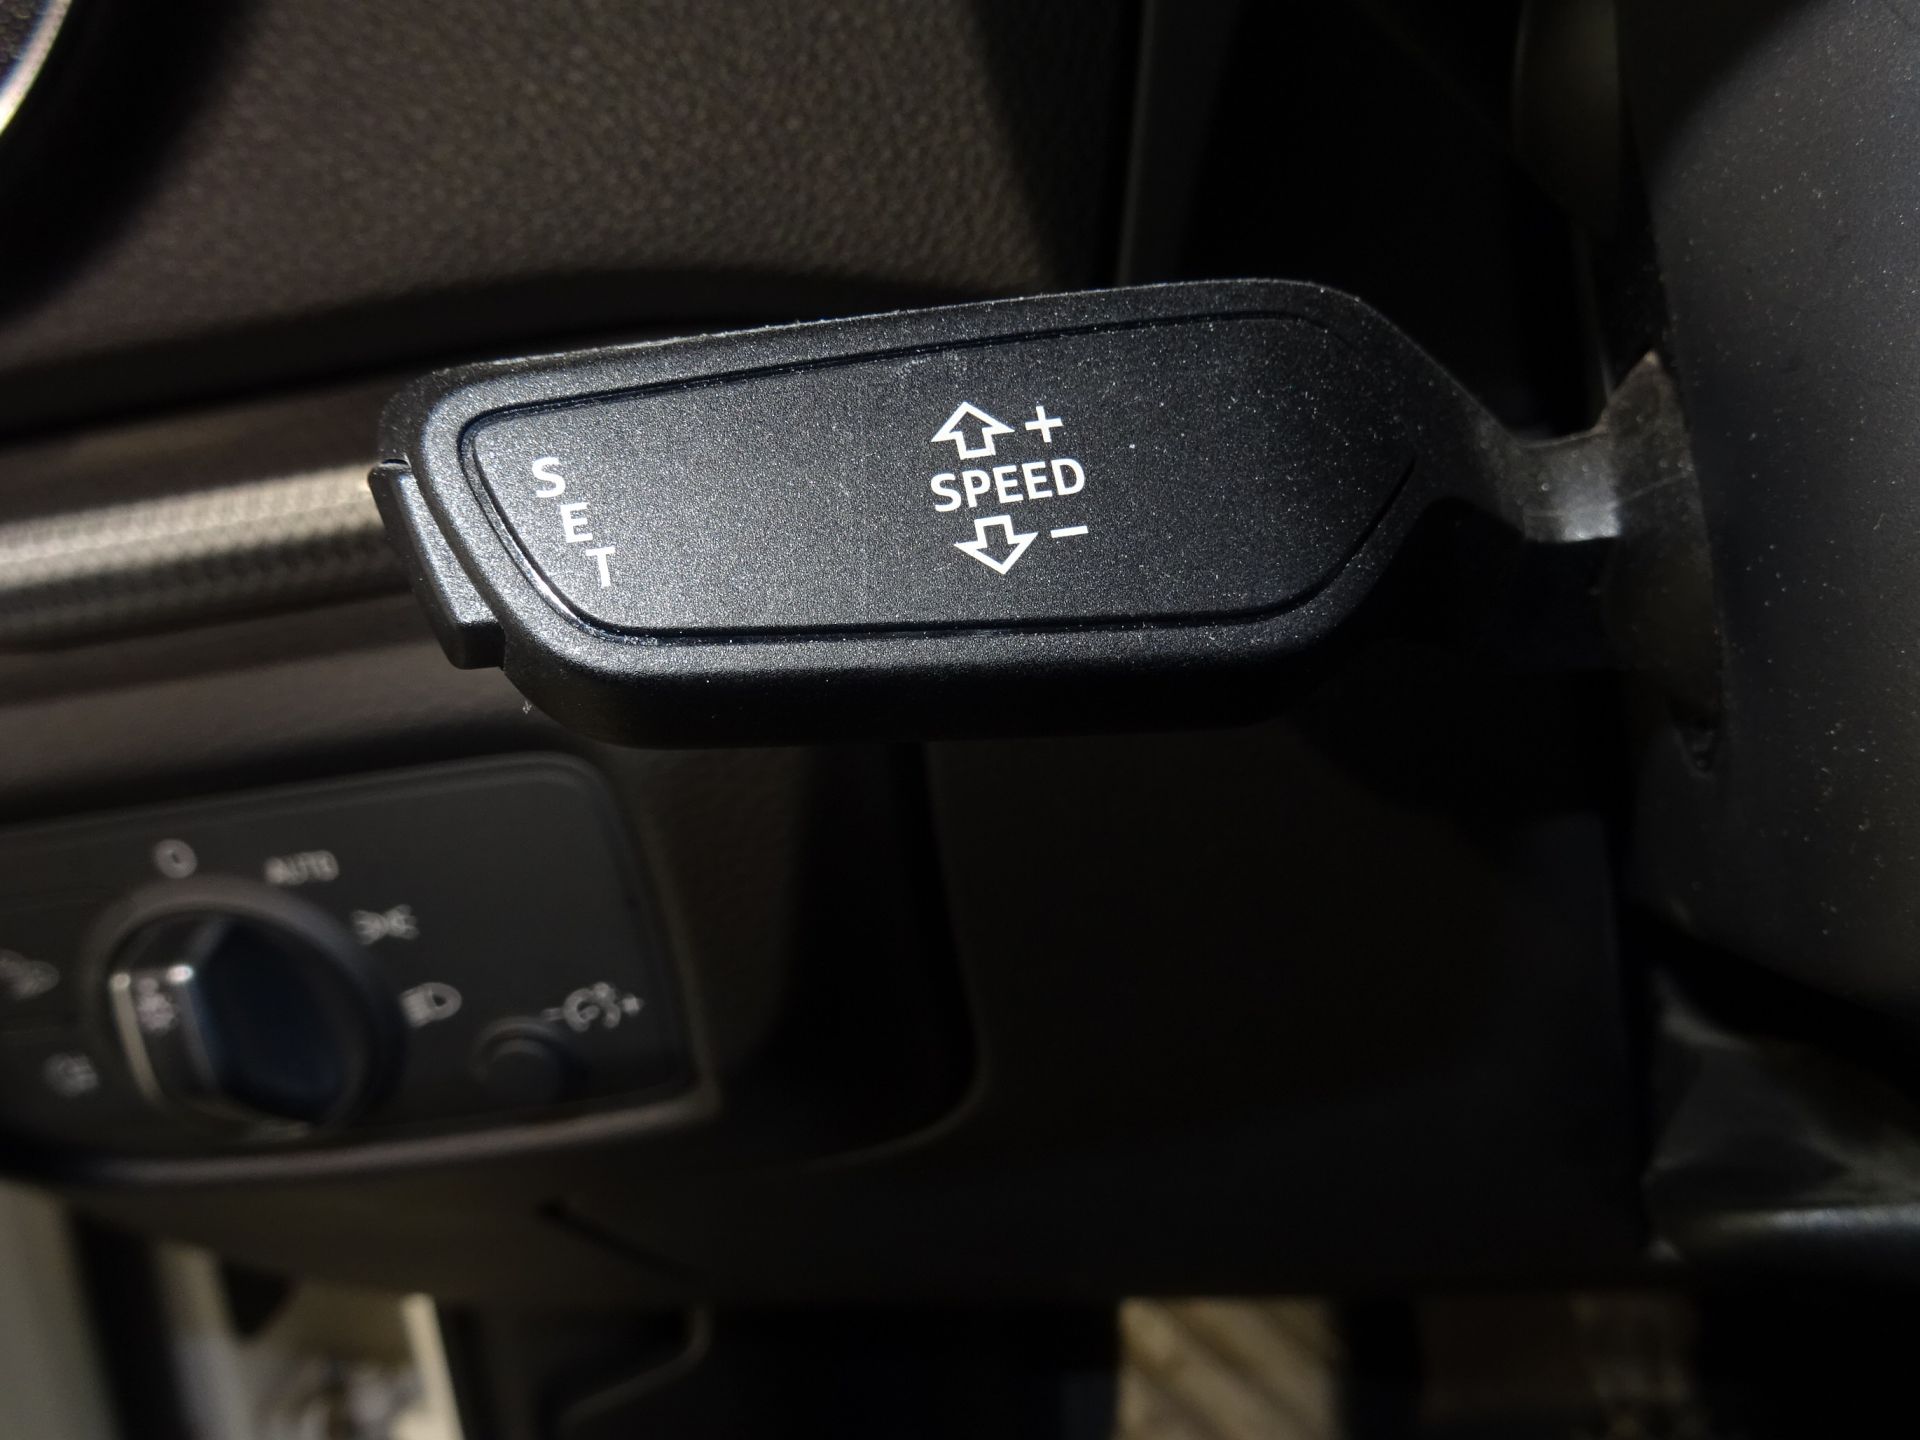 Audi A3 Sportback Design 30 TDI 85kW (116CV)